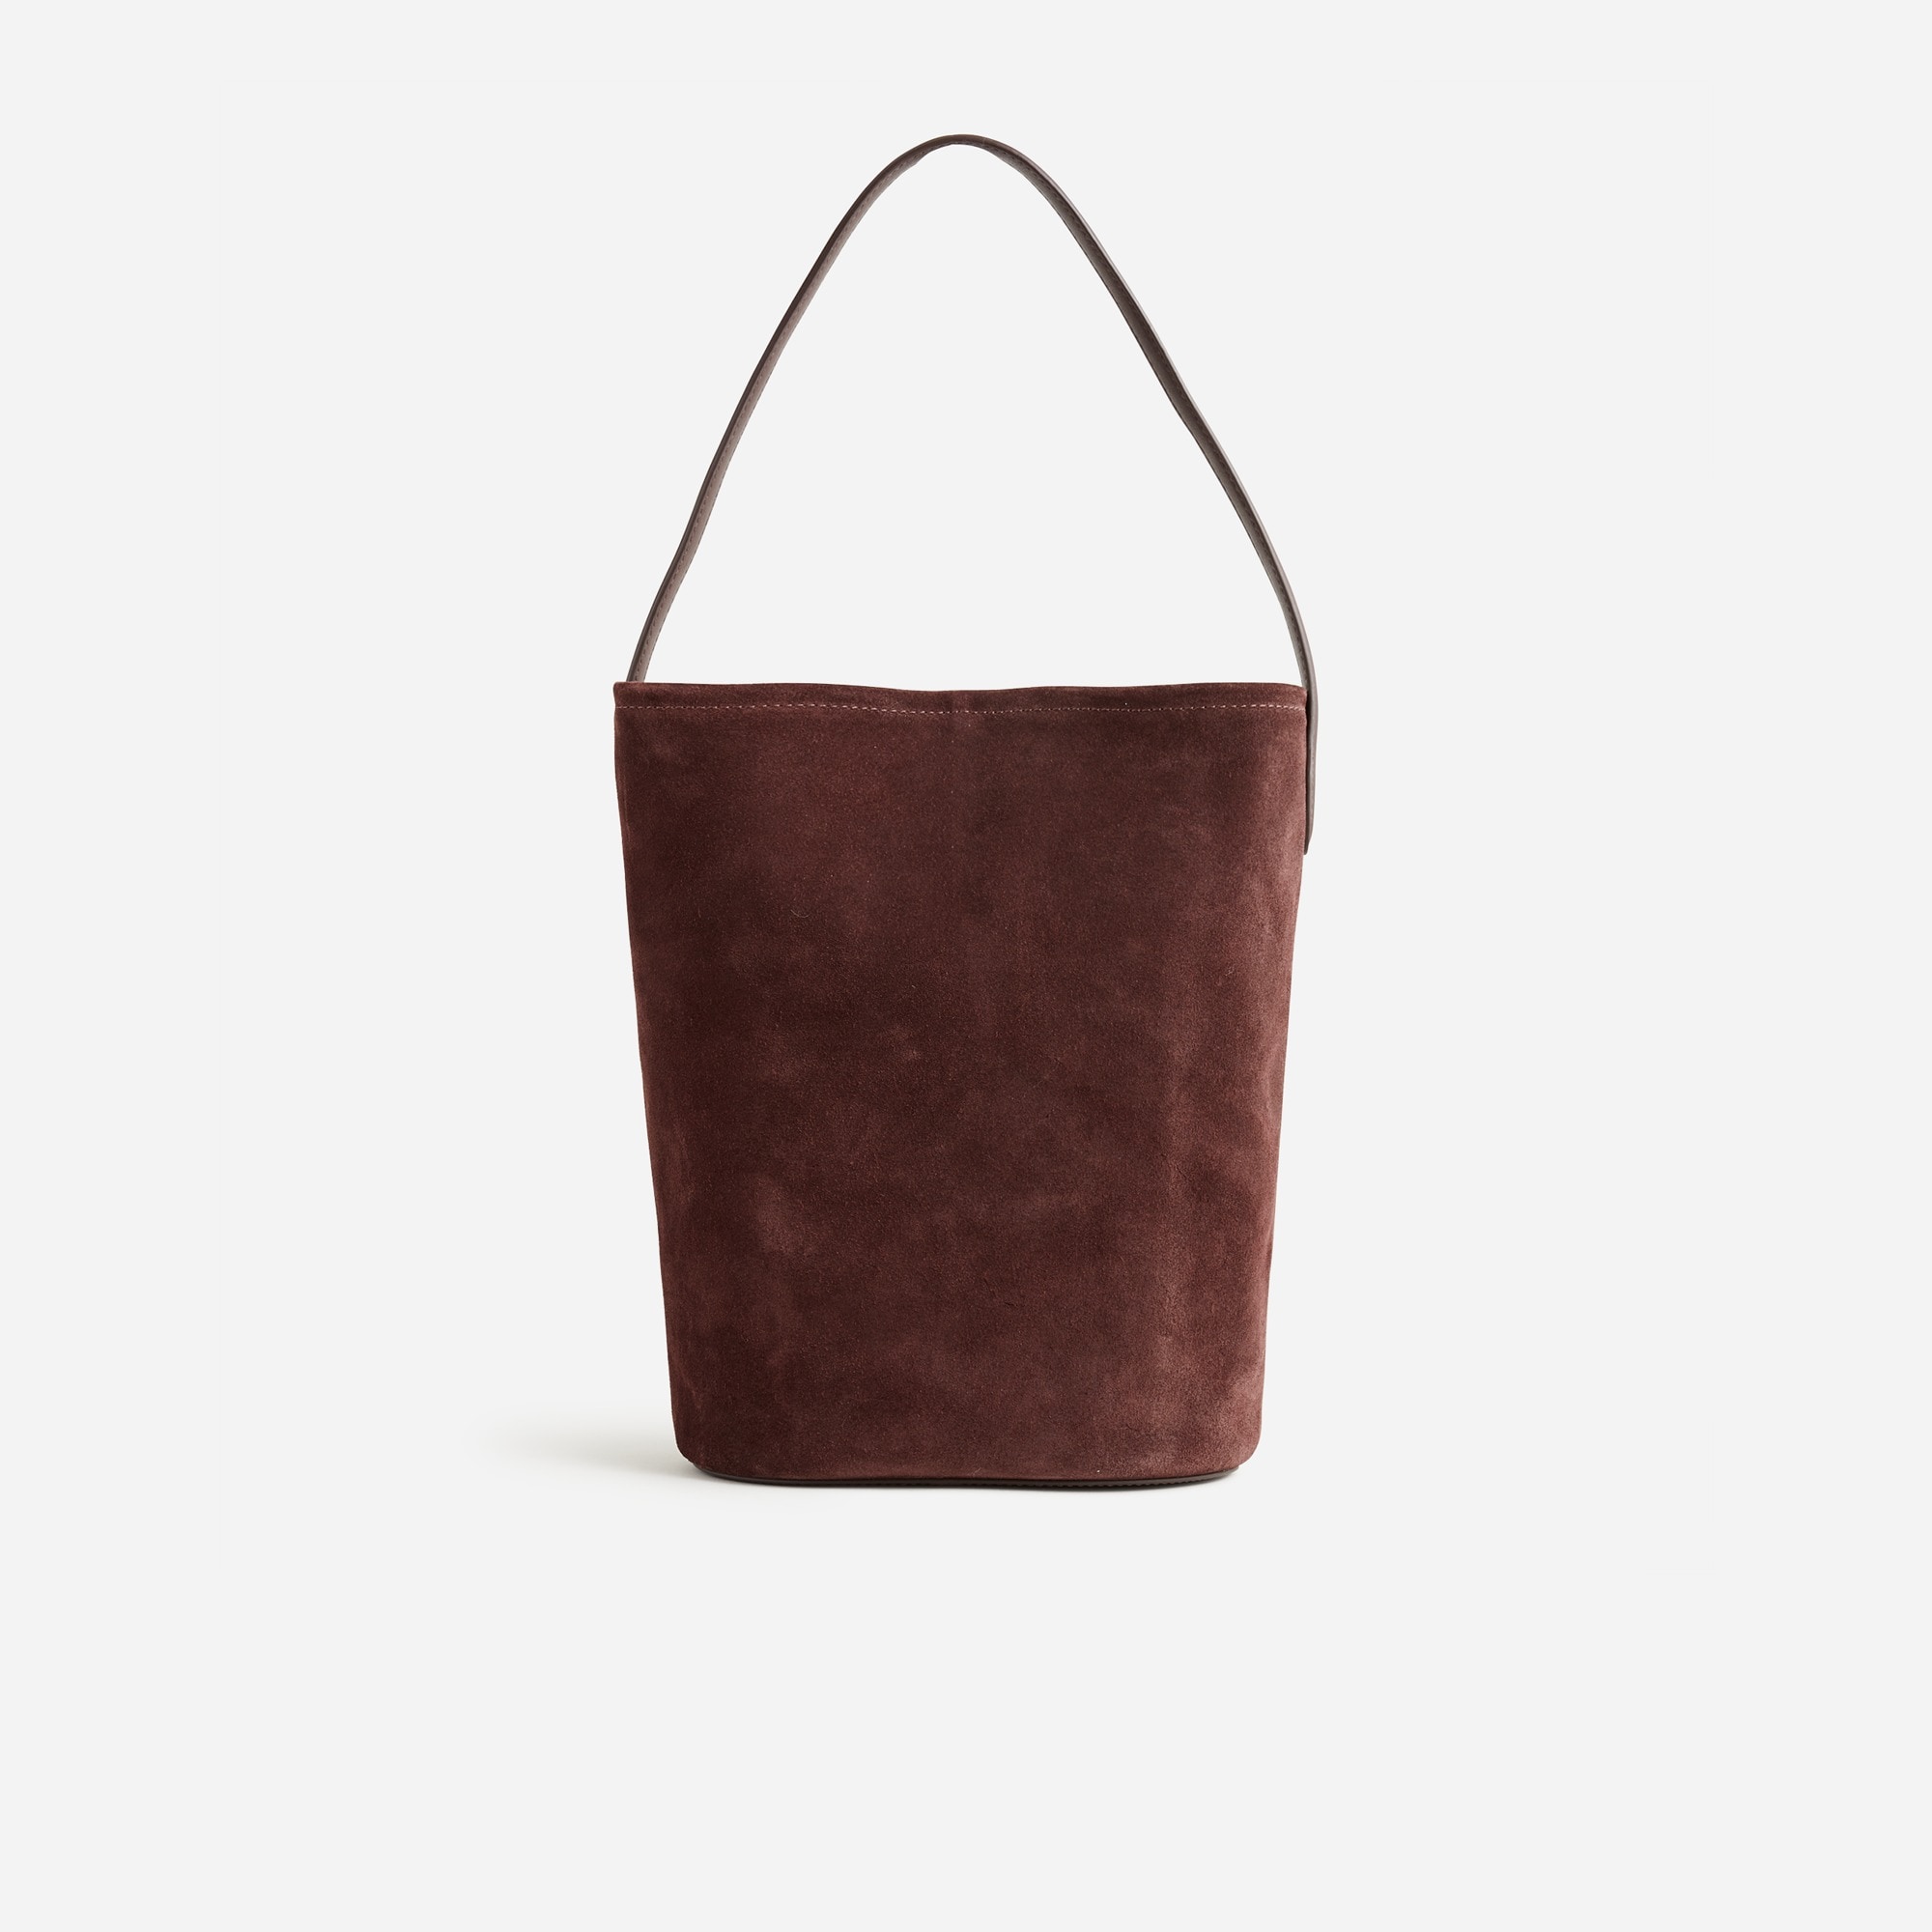 Berkeley bucket bag in leather and suede